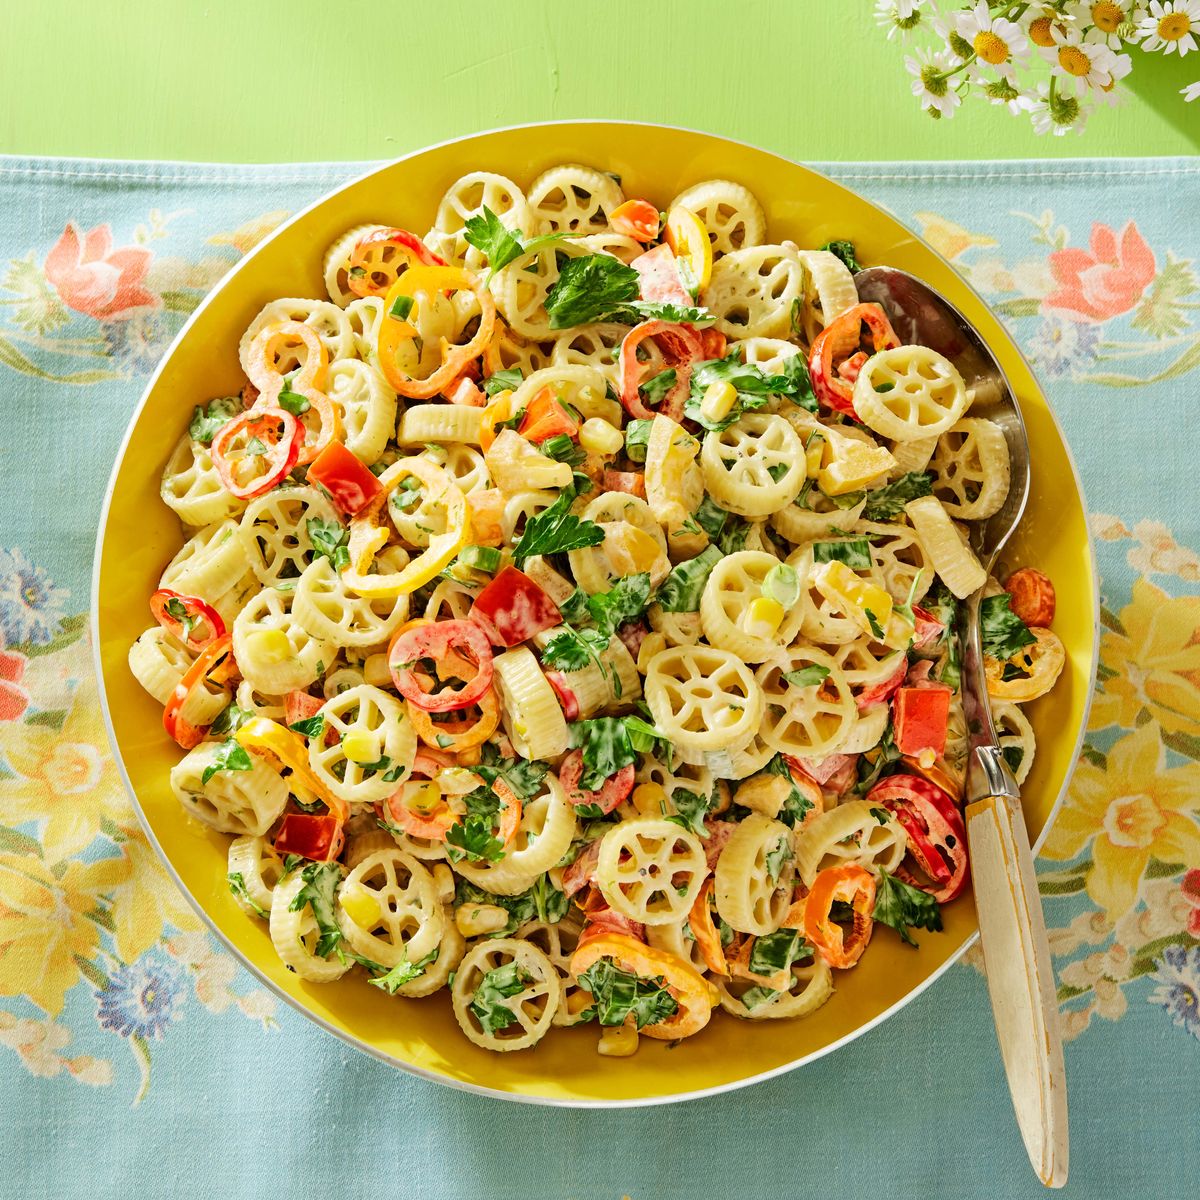 the pioneer woman's spicy veggie pasta salad recipe